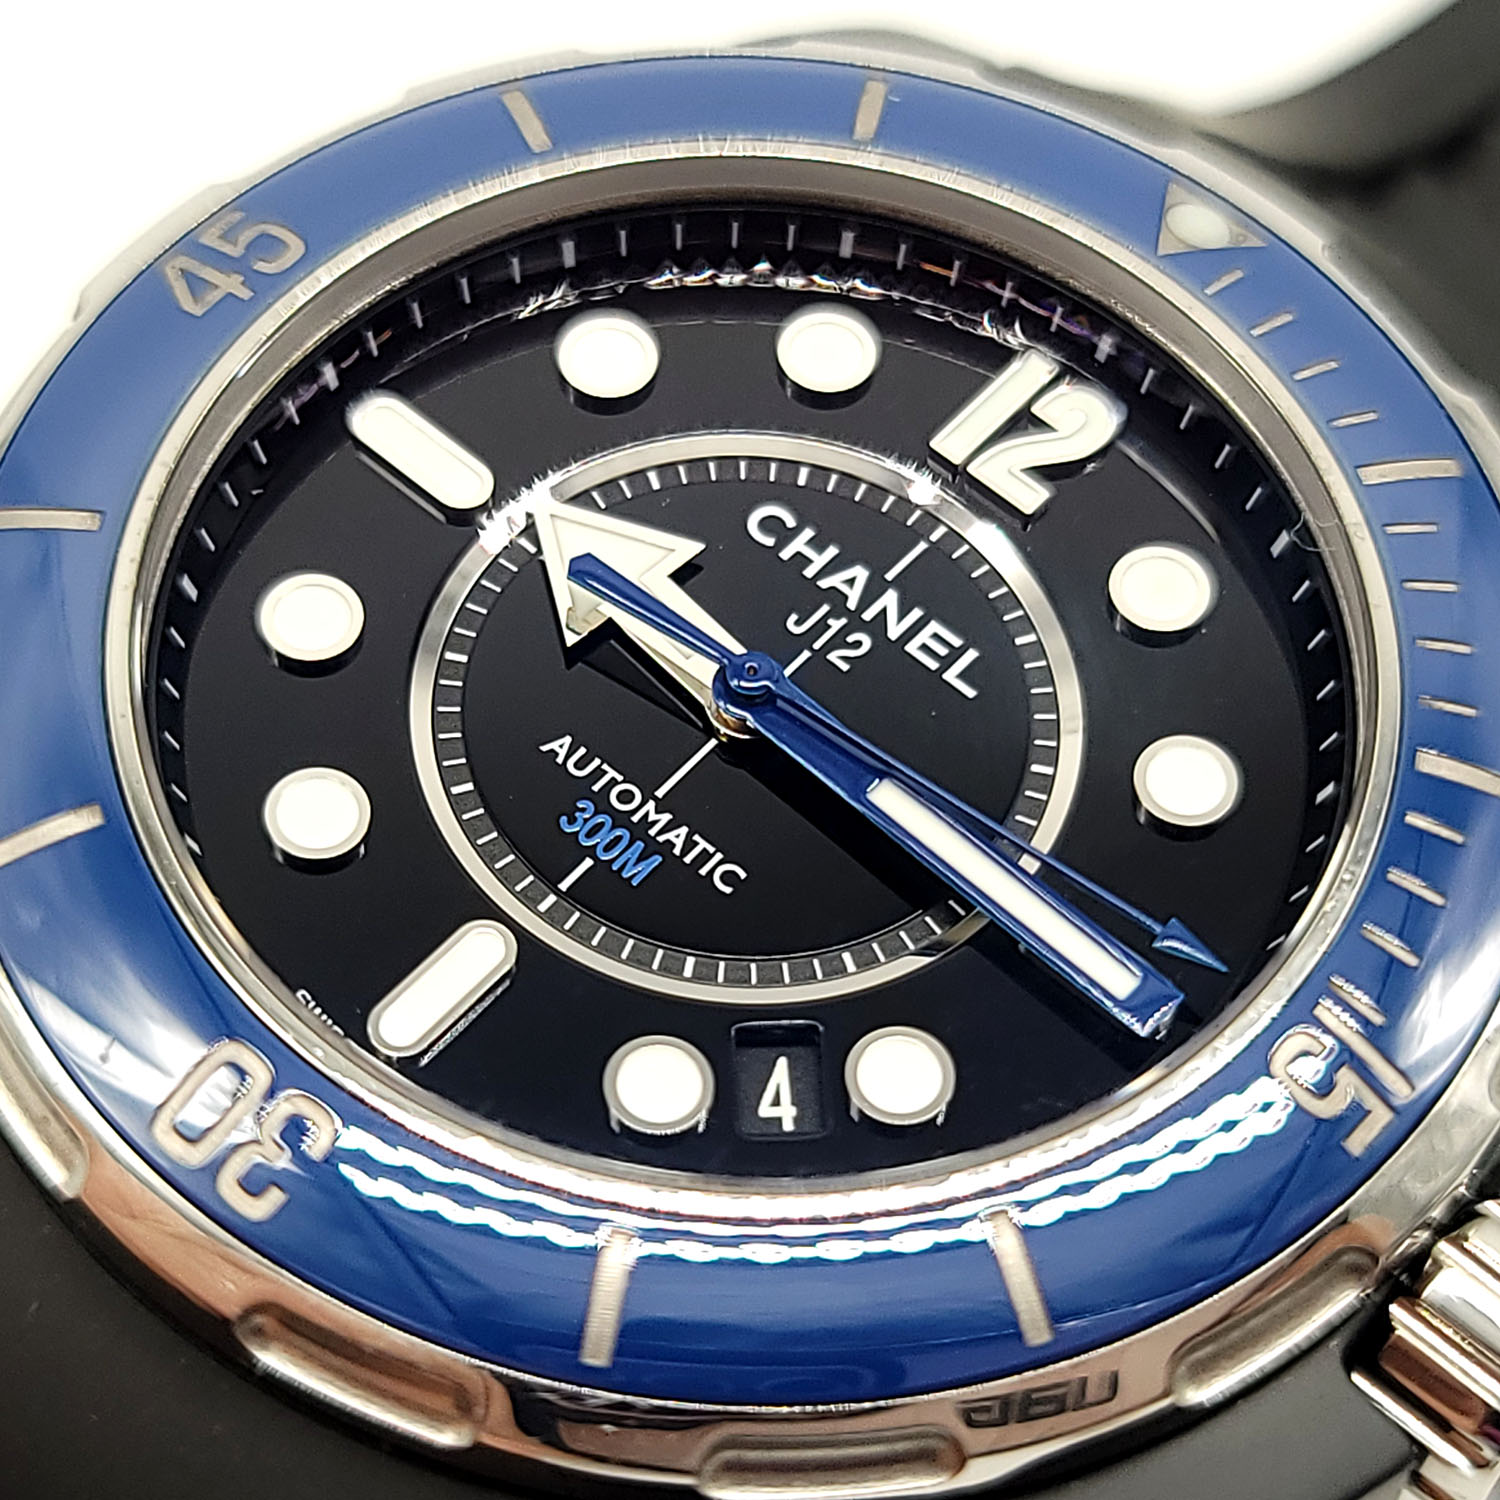 Chanel J12 Marine Automatic Men's Watch